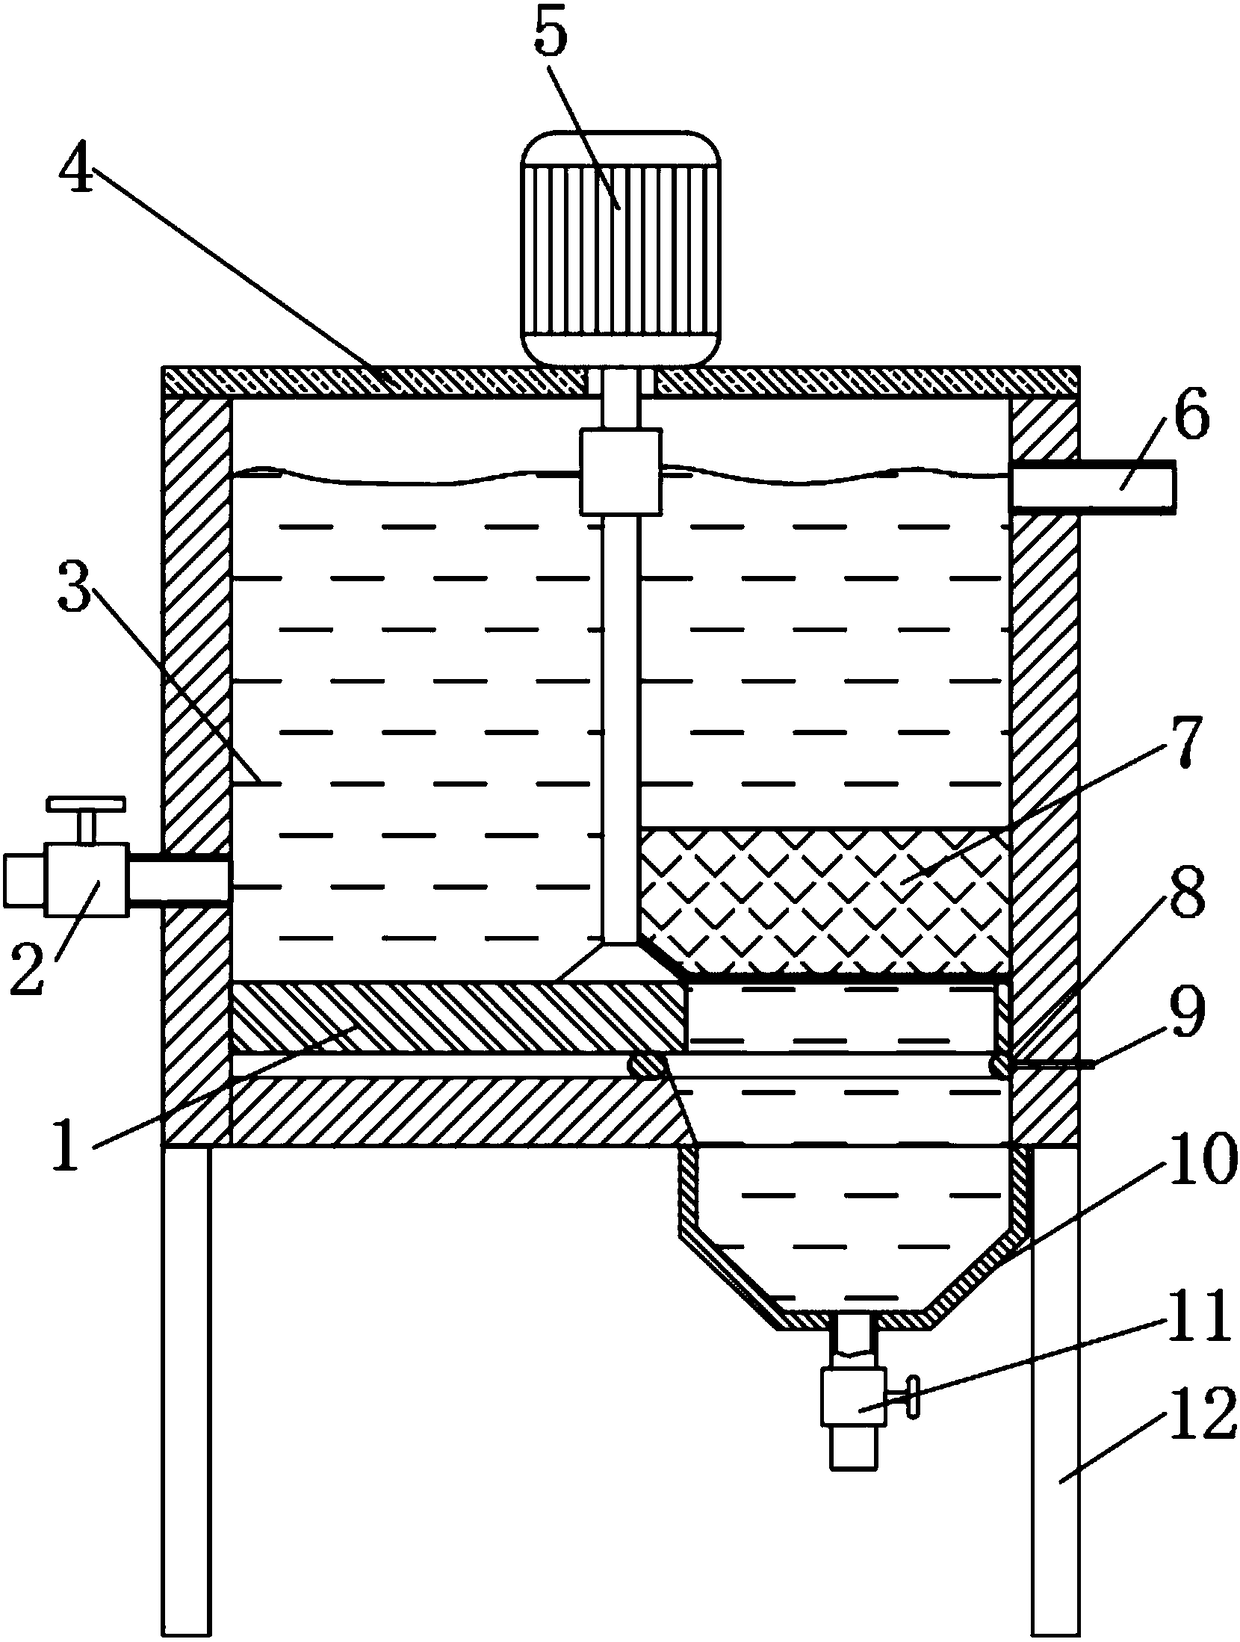 Novel water treatment rotary sedimentation bin for environmental protection